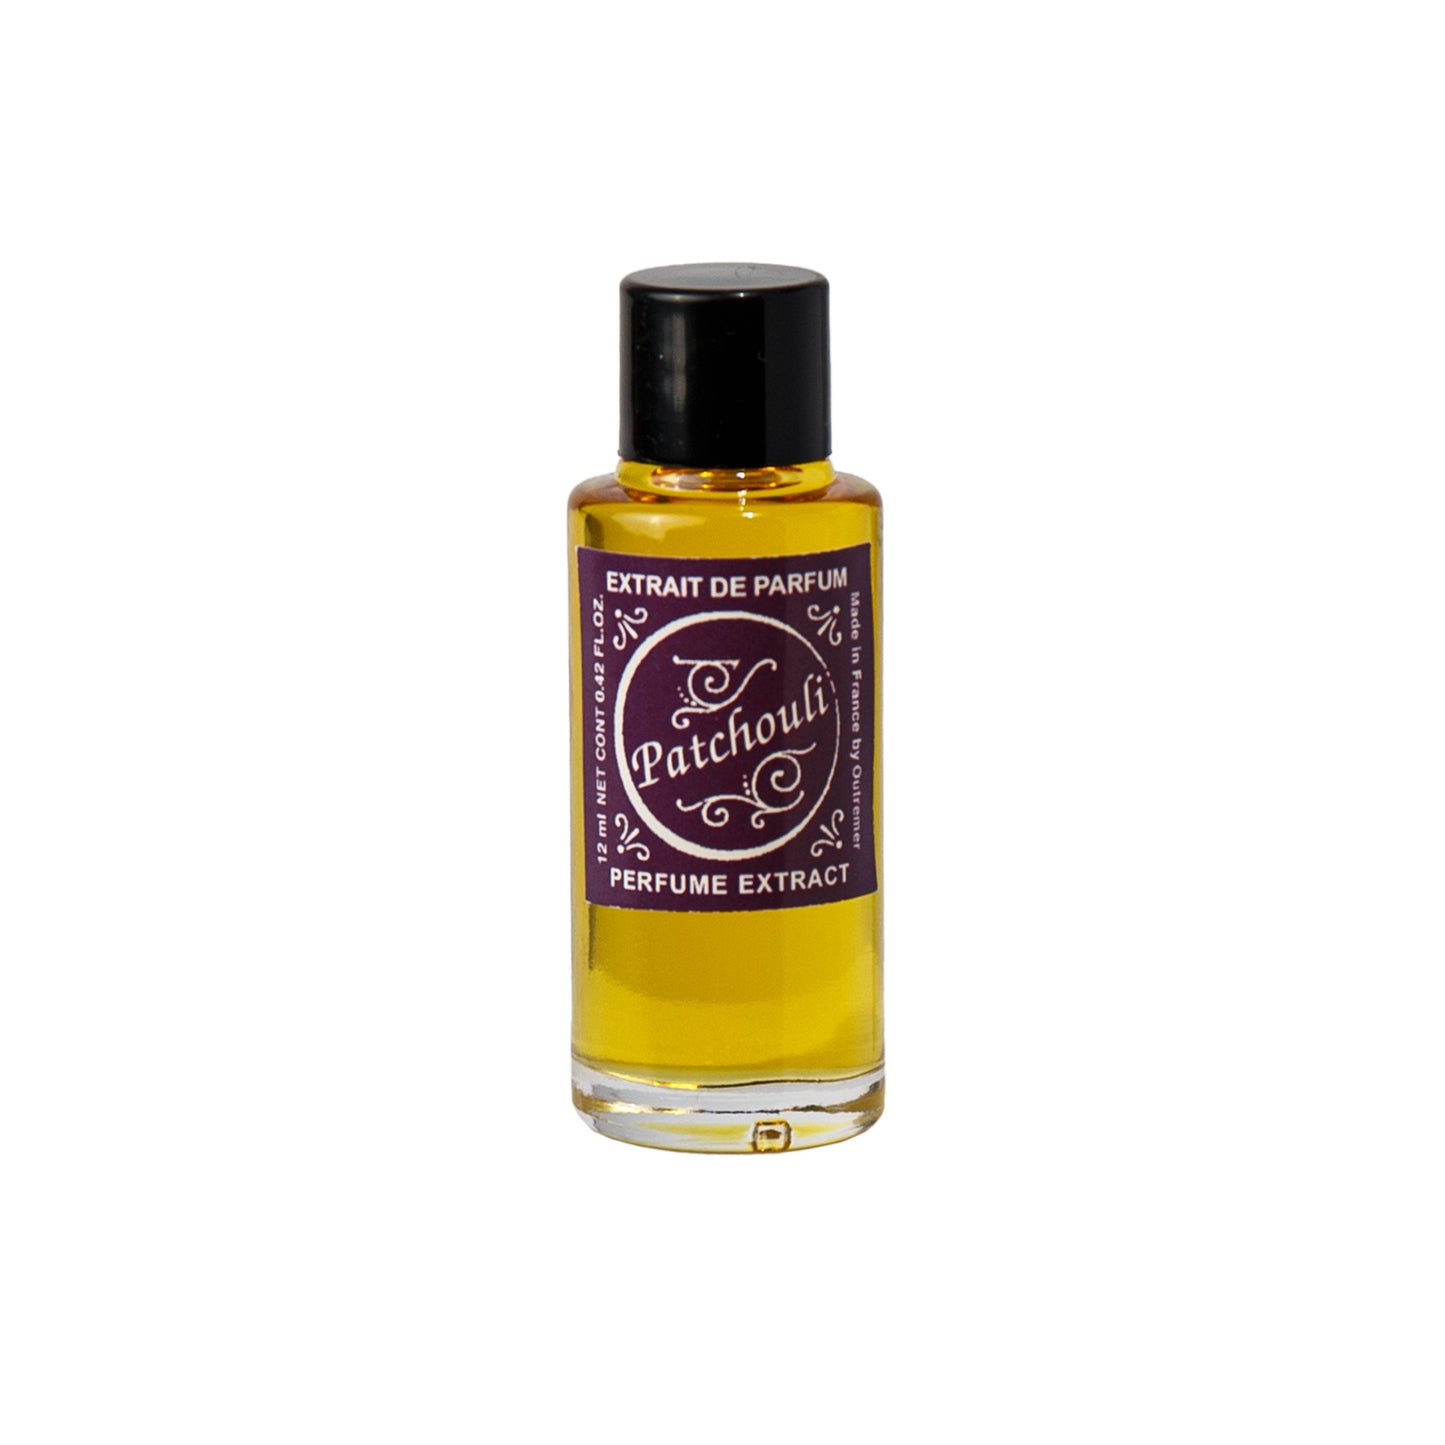 Primary image of Patchouli Perfume Extract